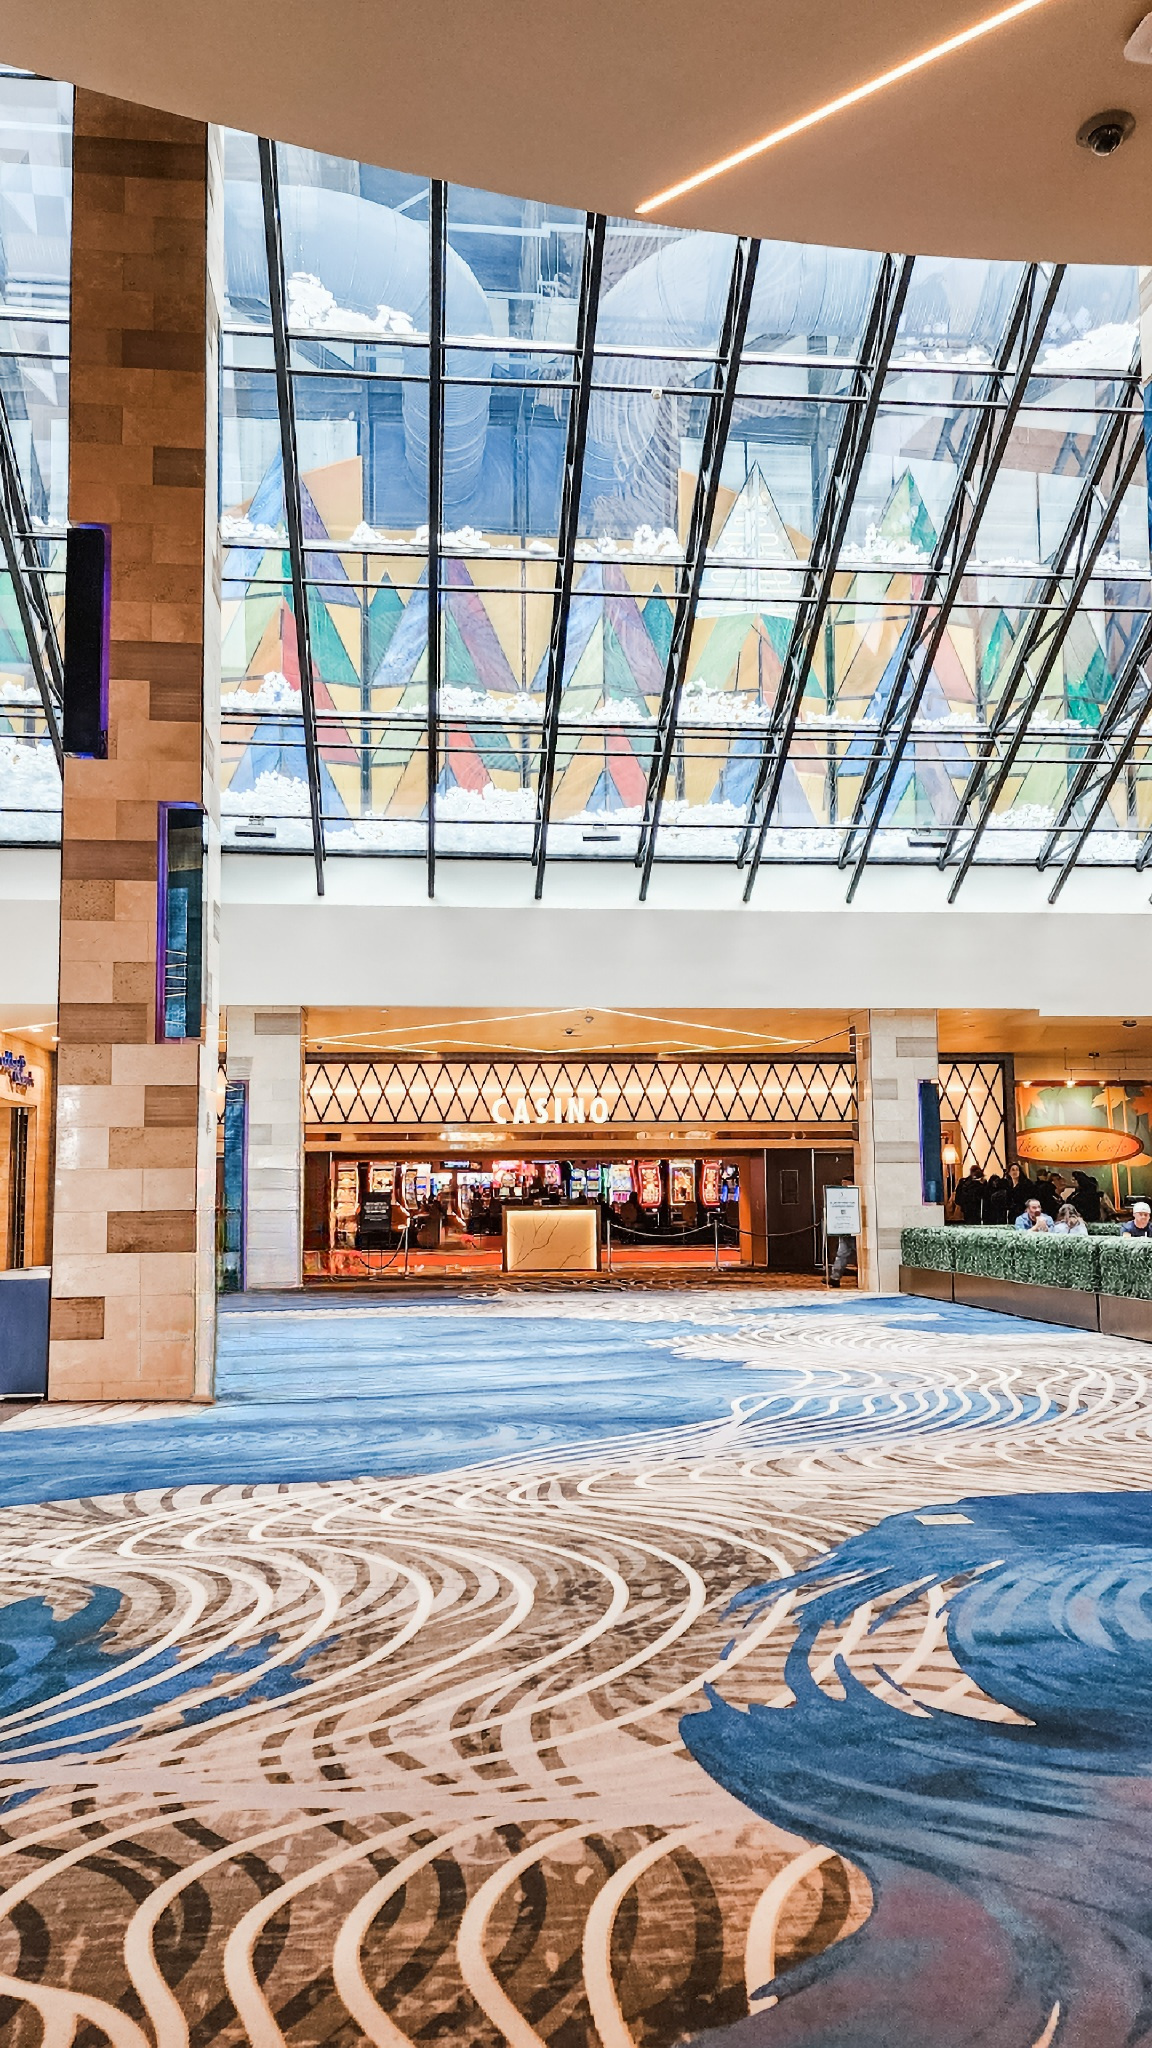 The entrance of the Casino gaming floor at Seneca Niagara Resort & Casino.